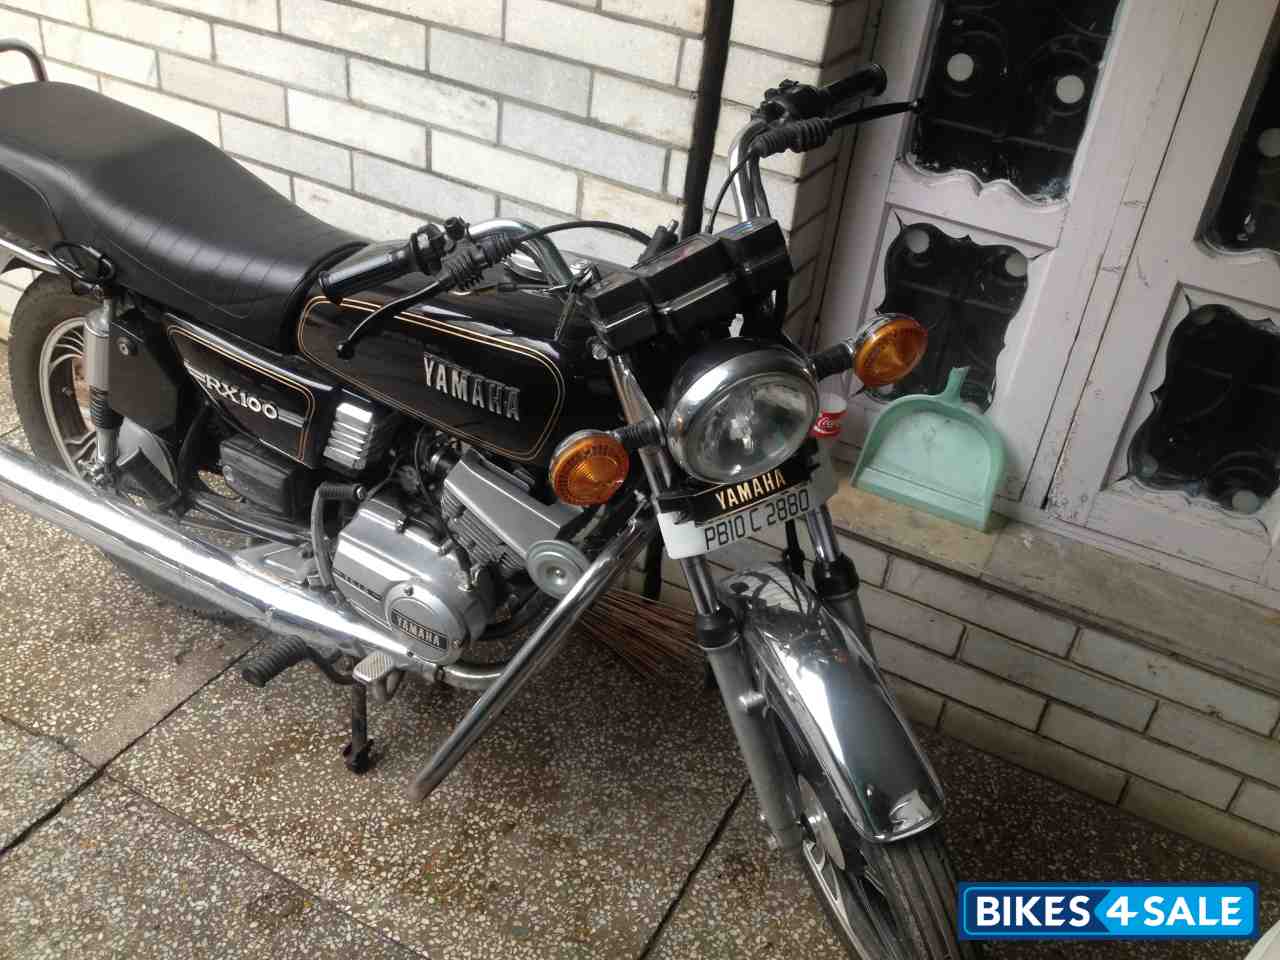 Used 1990 Model Yamaha Rx 100 For Sale In Jalandhar Id Bikes4sale